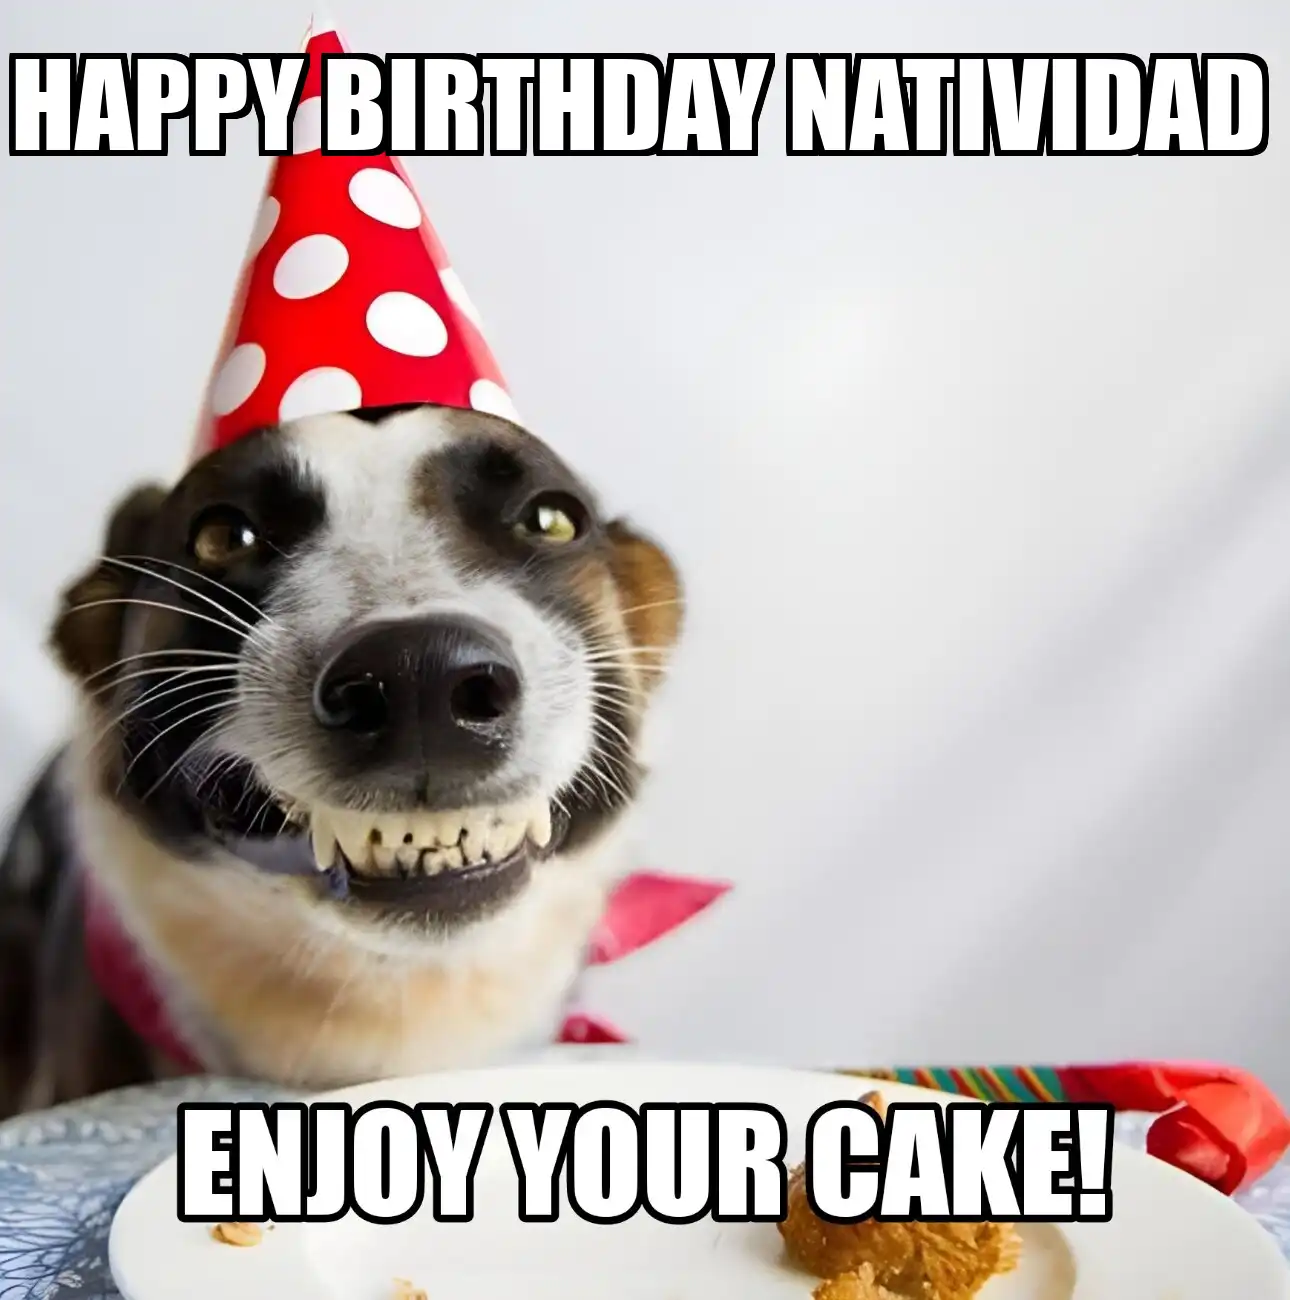 Happy Birthday Natividad Enjoy Your Cake Dog Meme